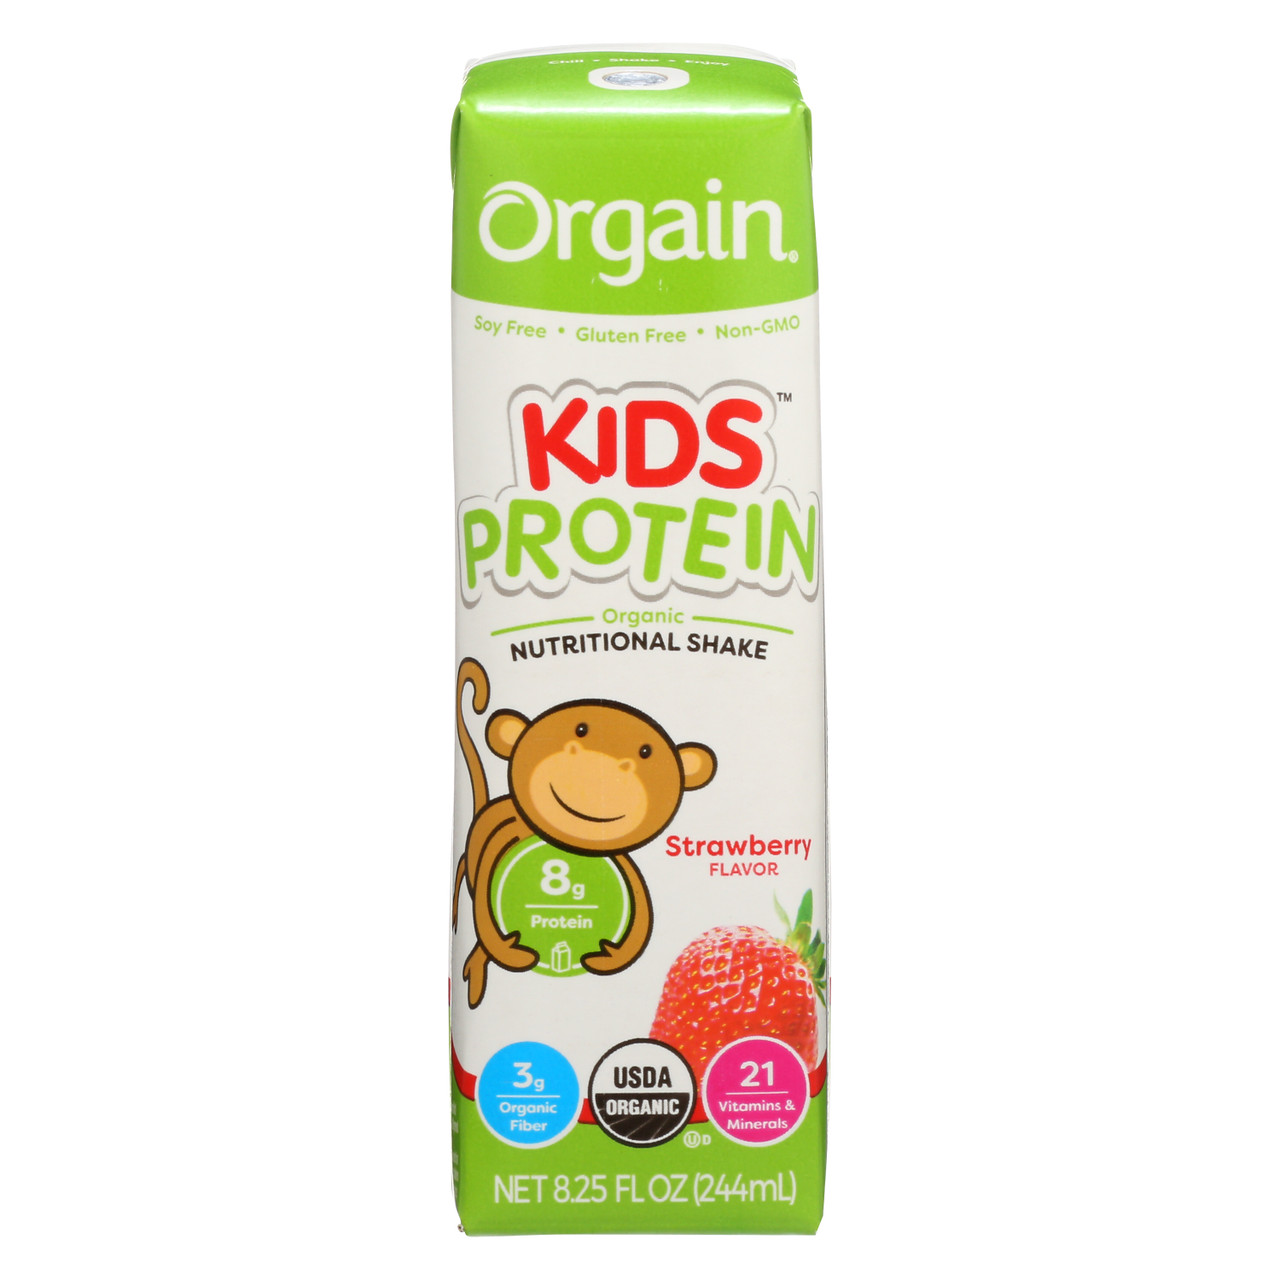 Orgain® Kids Protein Organic Nutritional Shake Strawberry 8.25oz